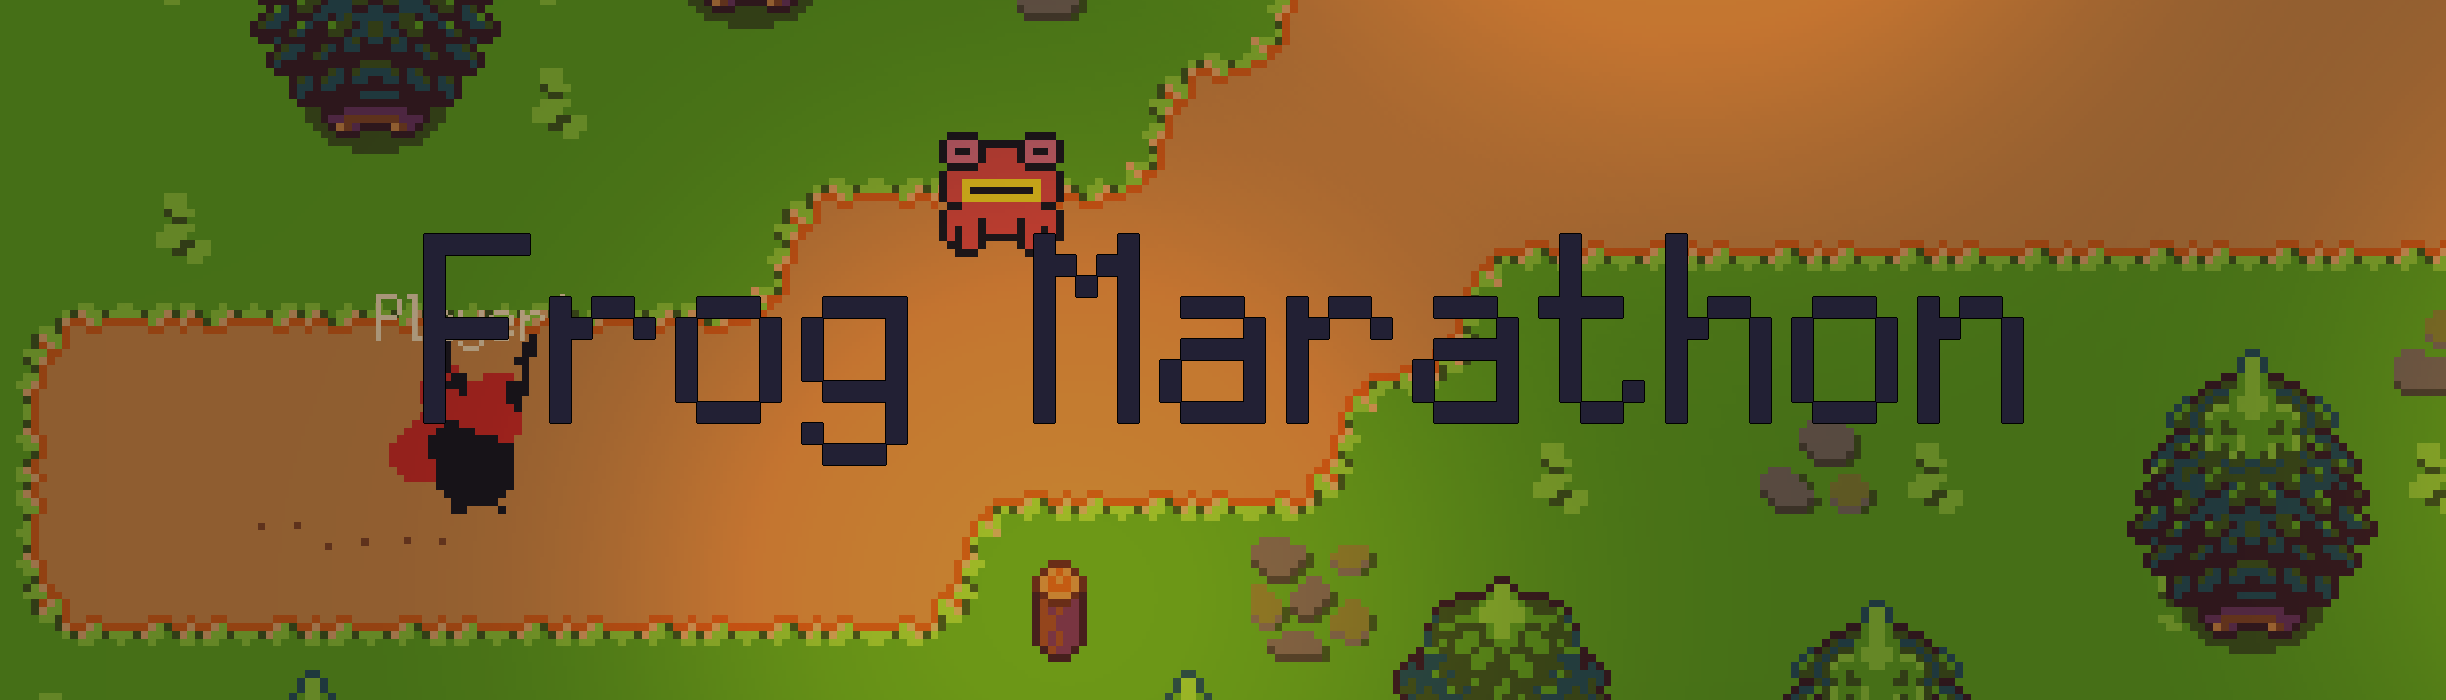 Frog Marathon